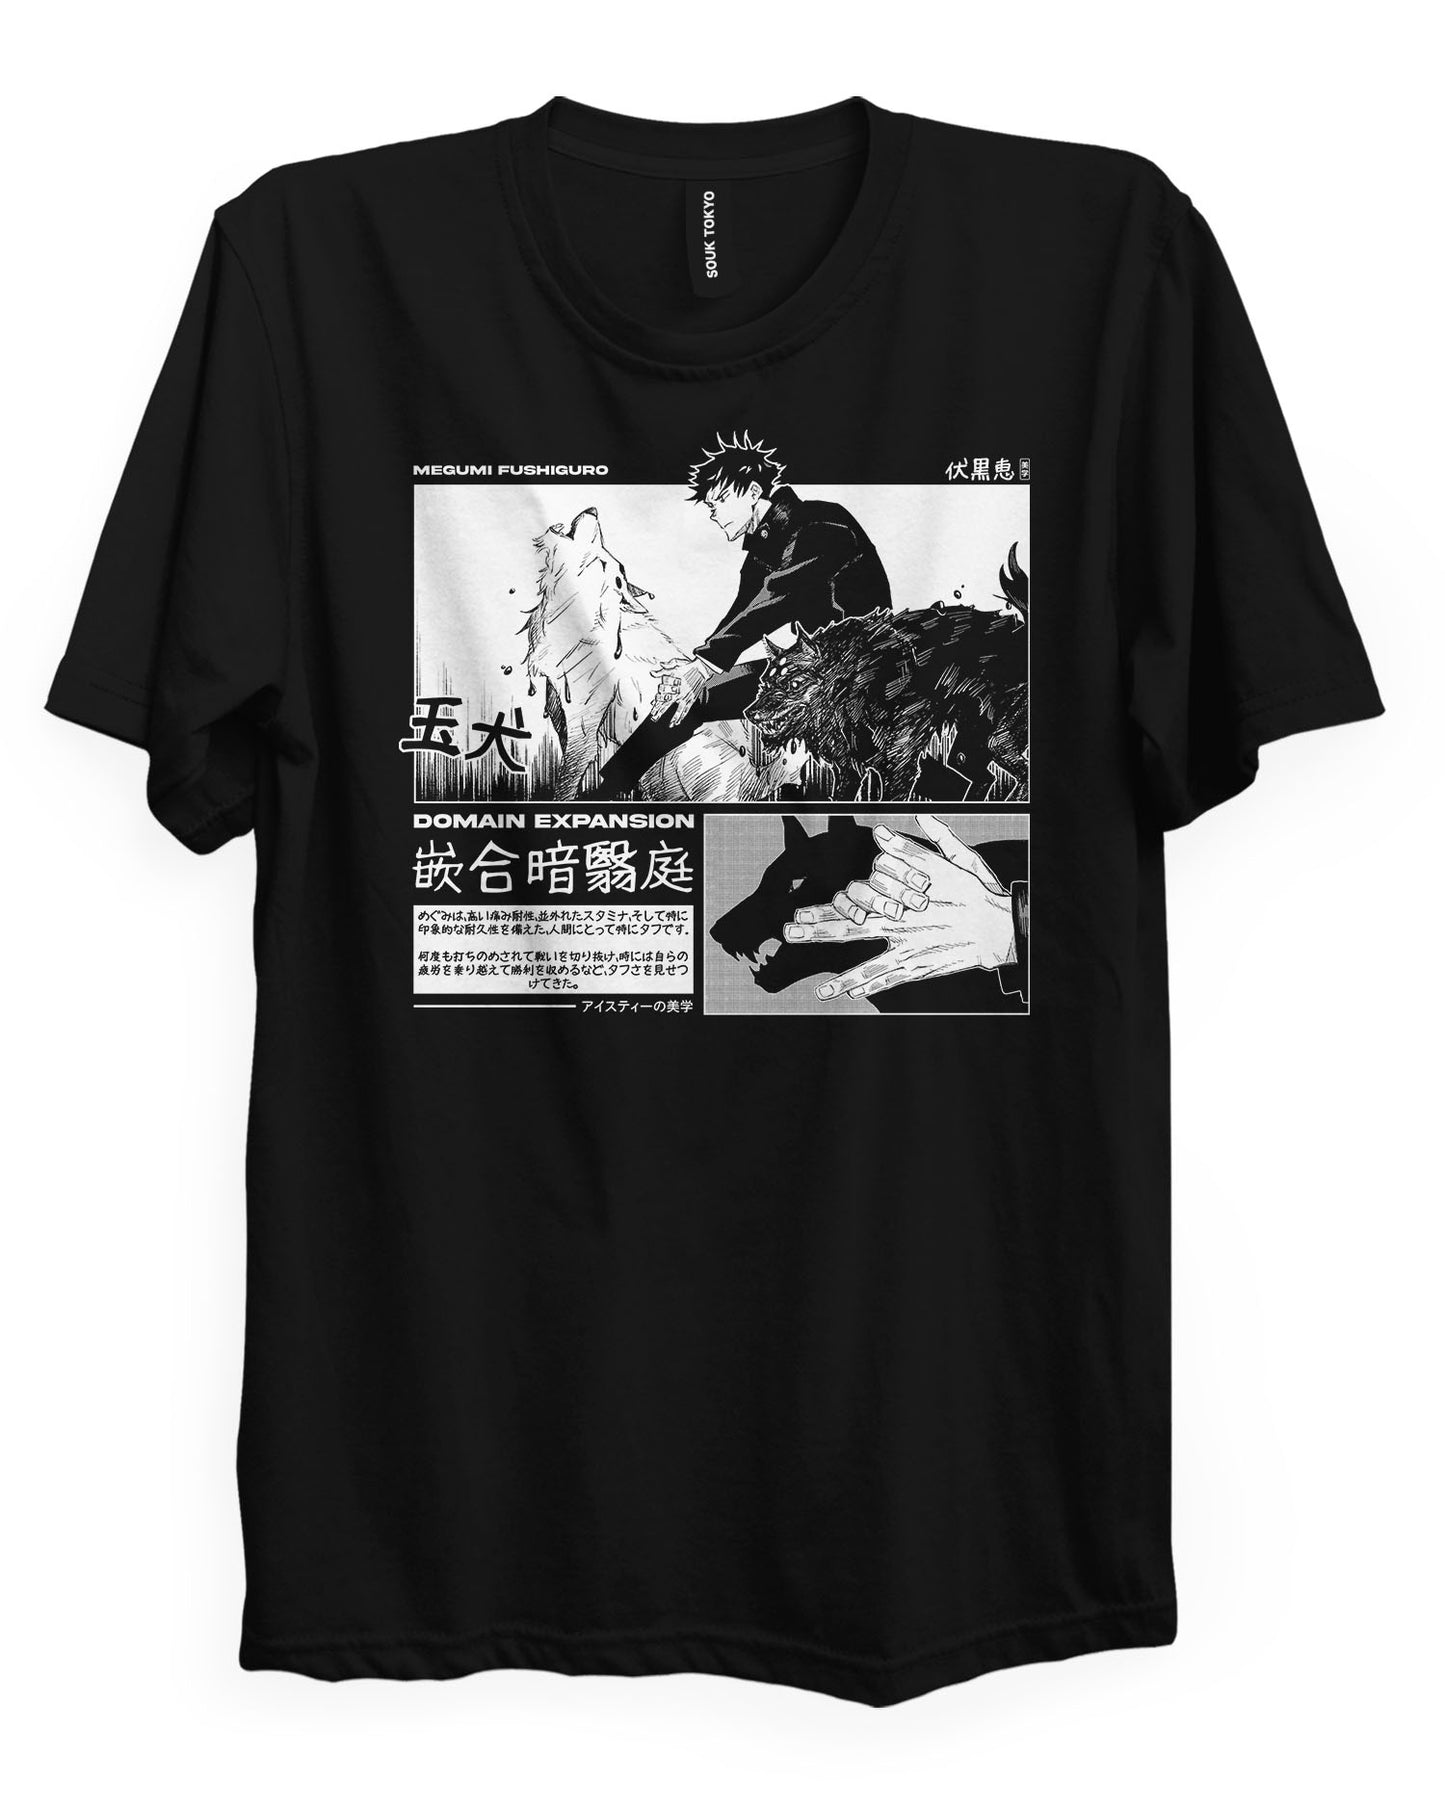 Megumi Demon Dogs T-Shirt